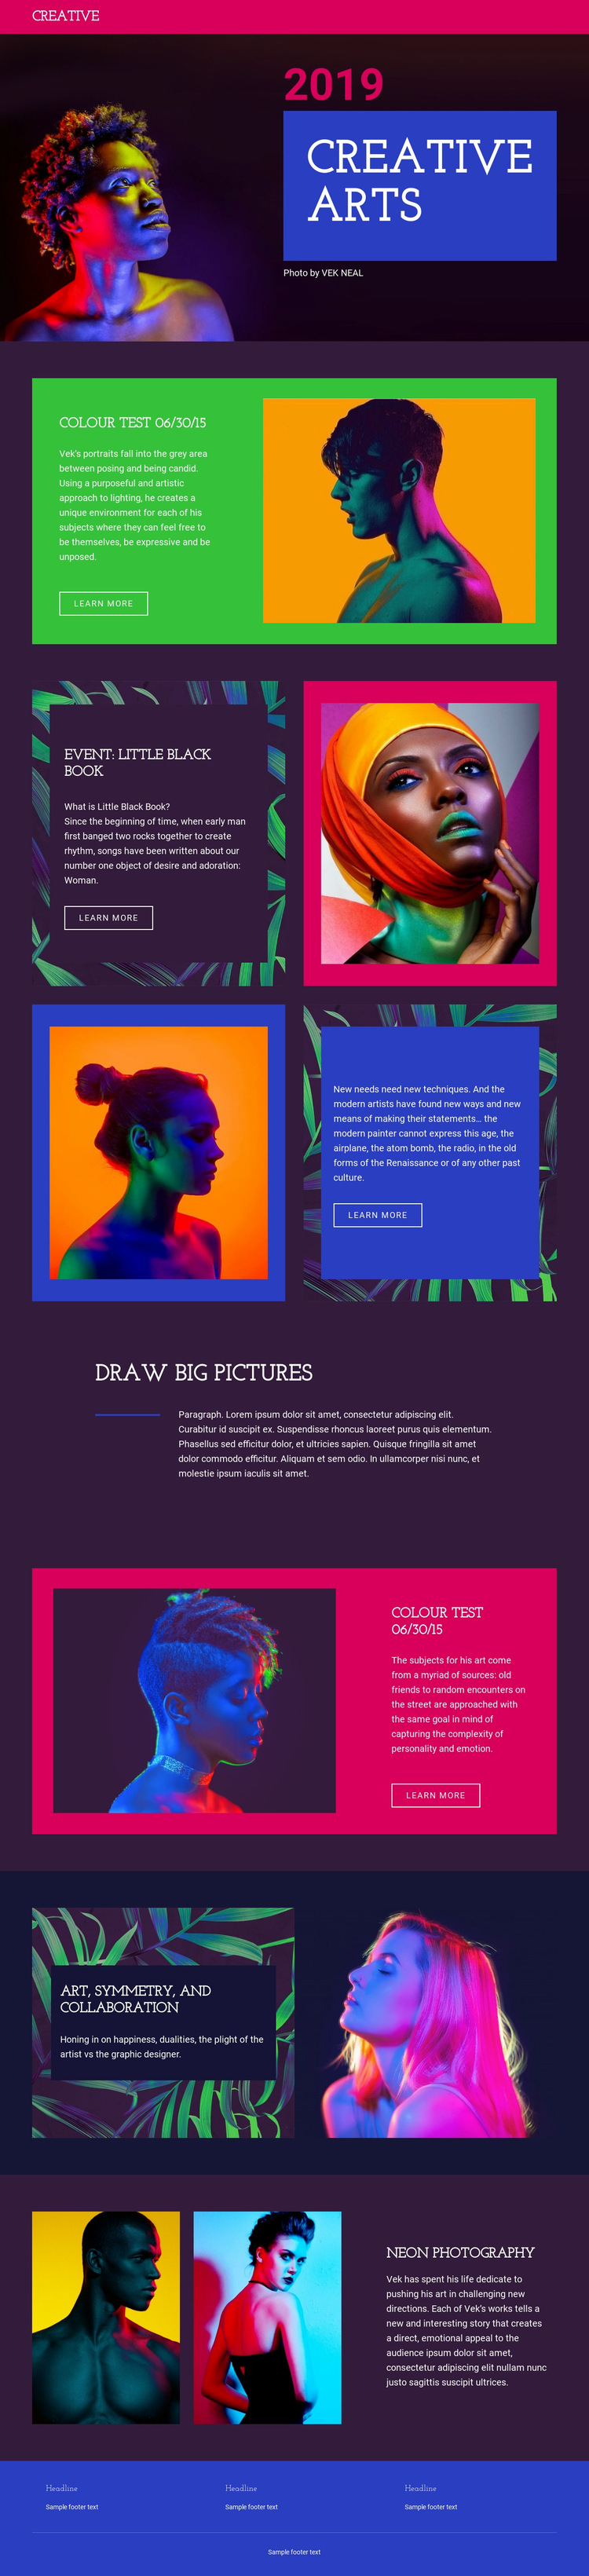 Creative Arts Web Page Design